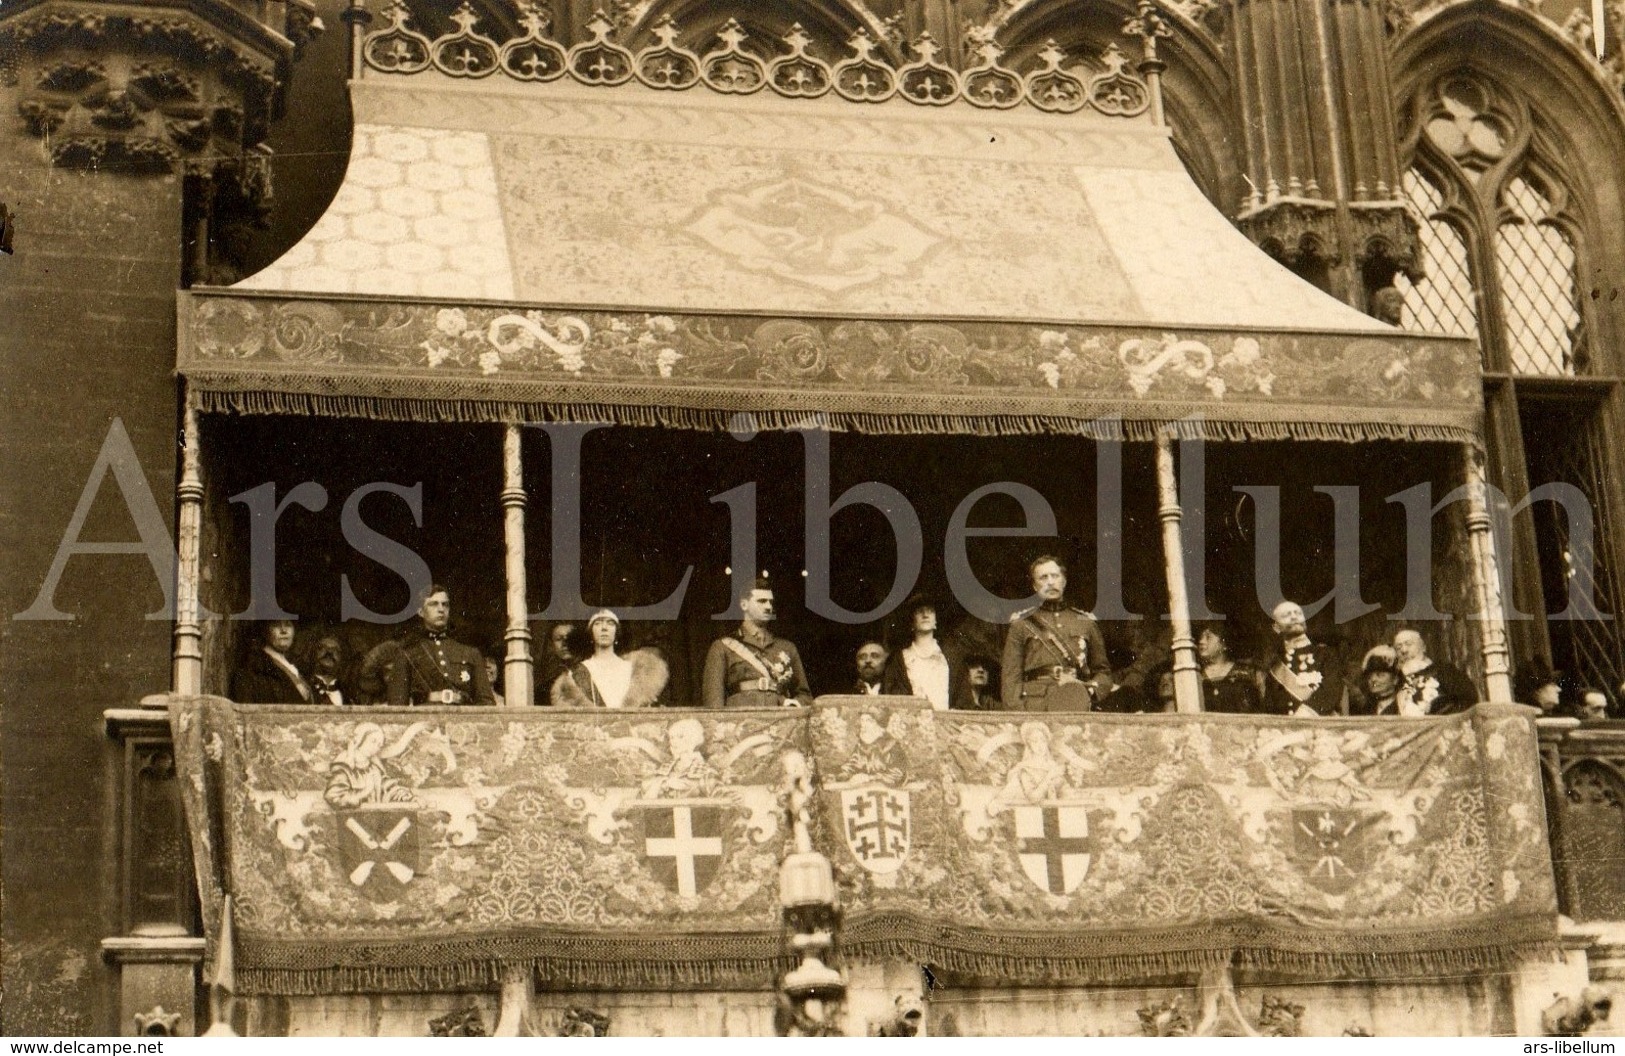 Postcard / ROYALTY / Belgium / Belgique / Roi Albert I / Koning Albert I / Koningin Elisabeth / Reine Elisabeth / 1922 - Familias Reales